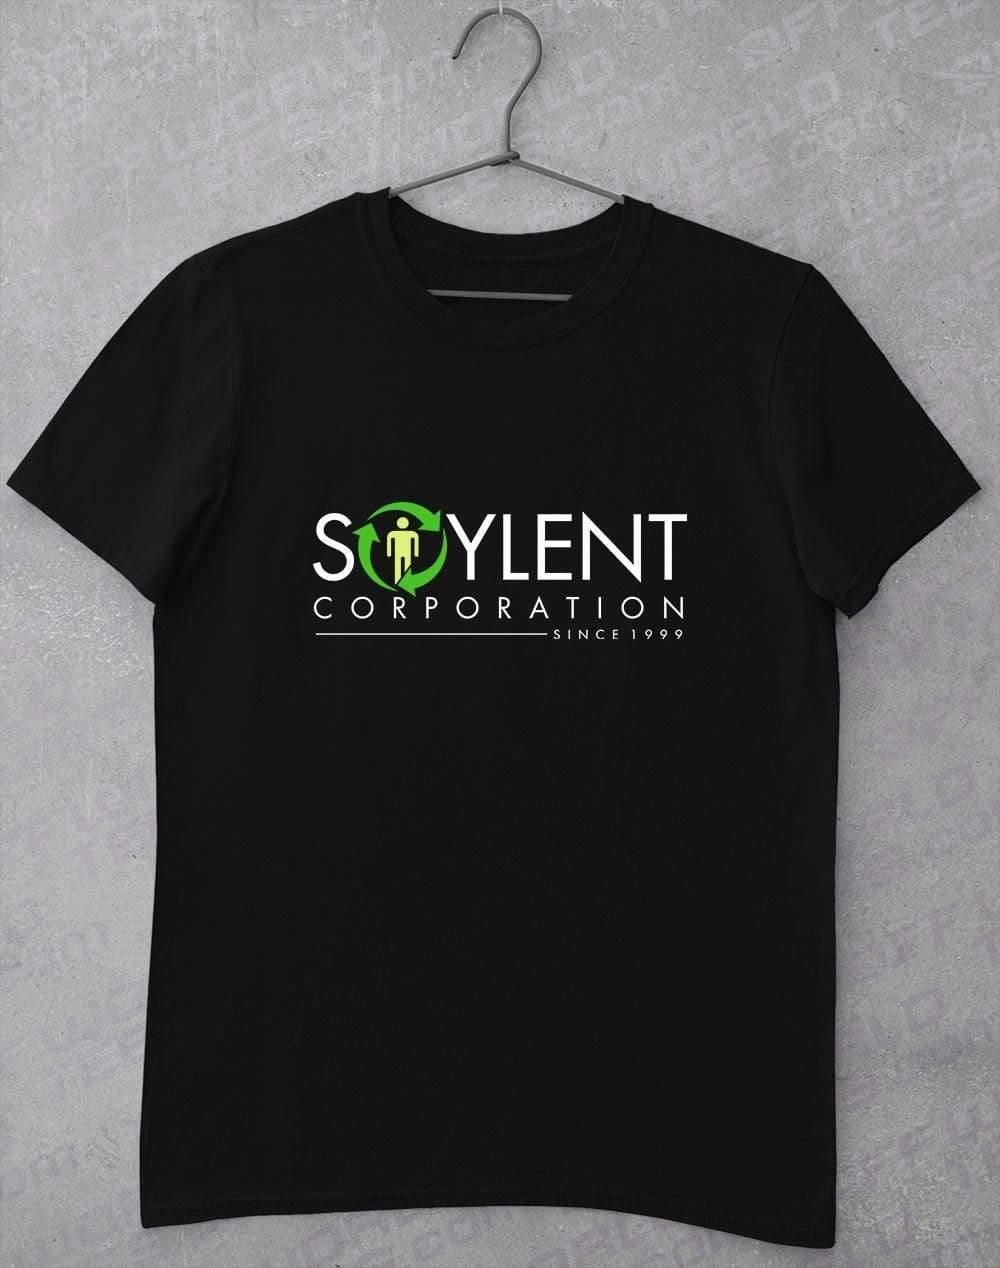 Soylent Corporation T-Shirt S / Black  - Off World Tees